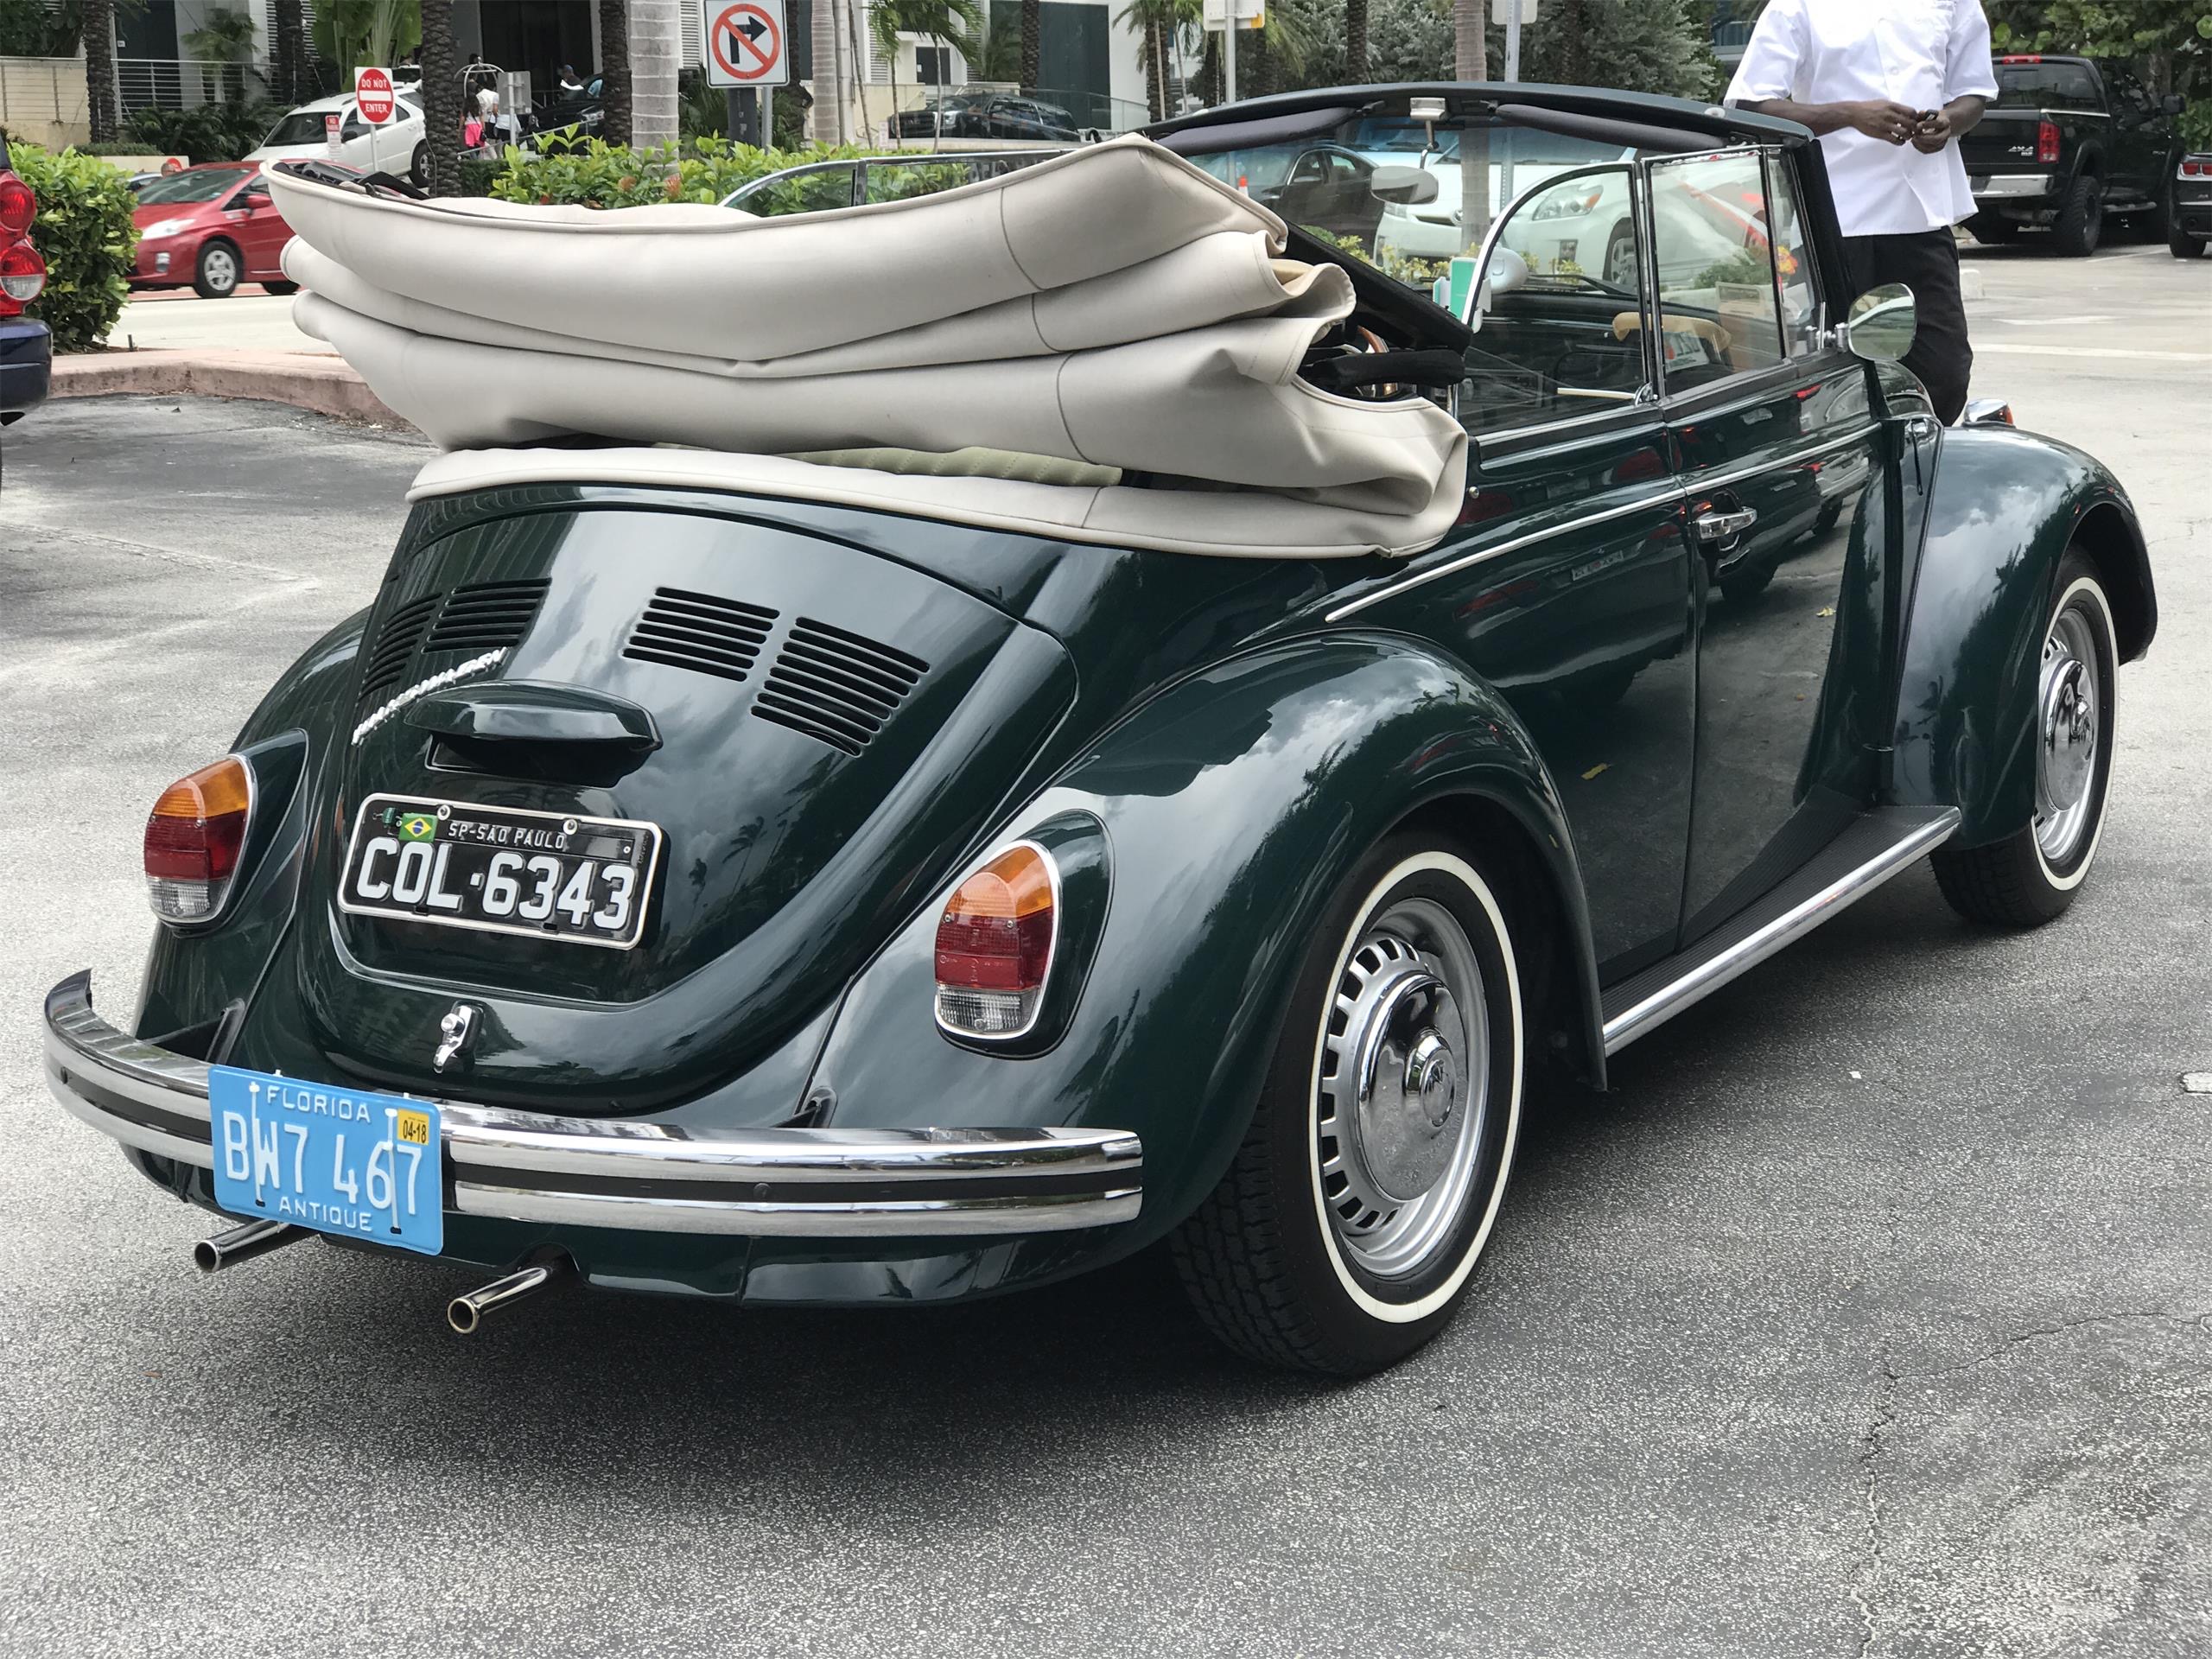 Brazilian Bug, A Brazilian Bug, ClassicCars.com Journal